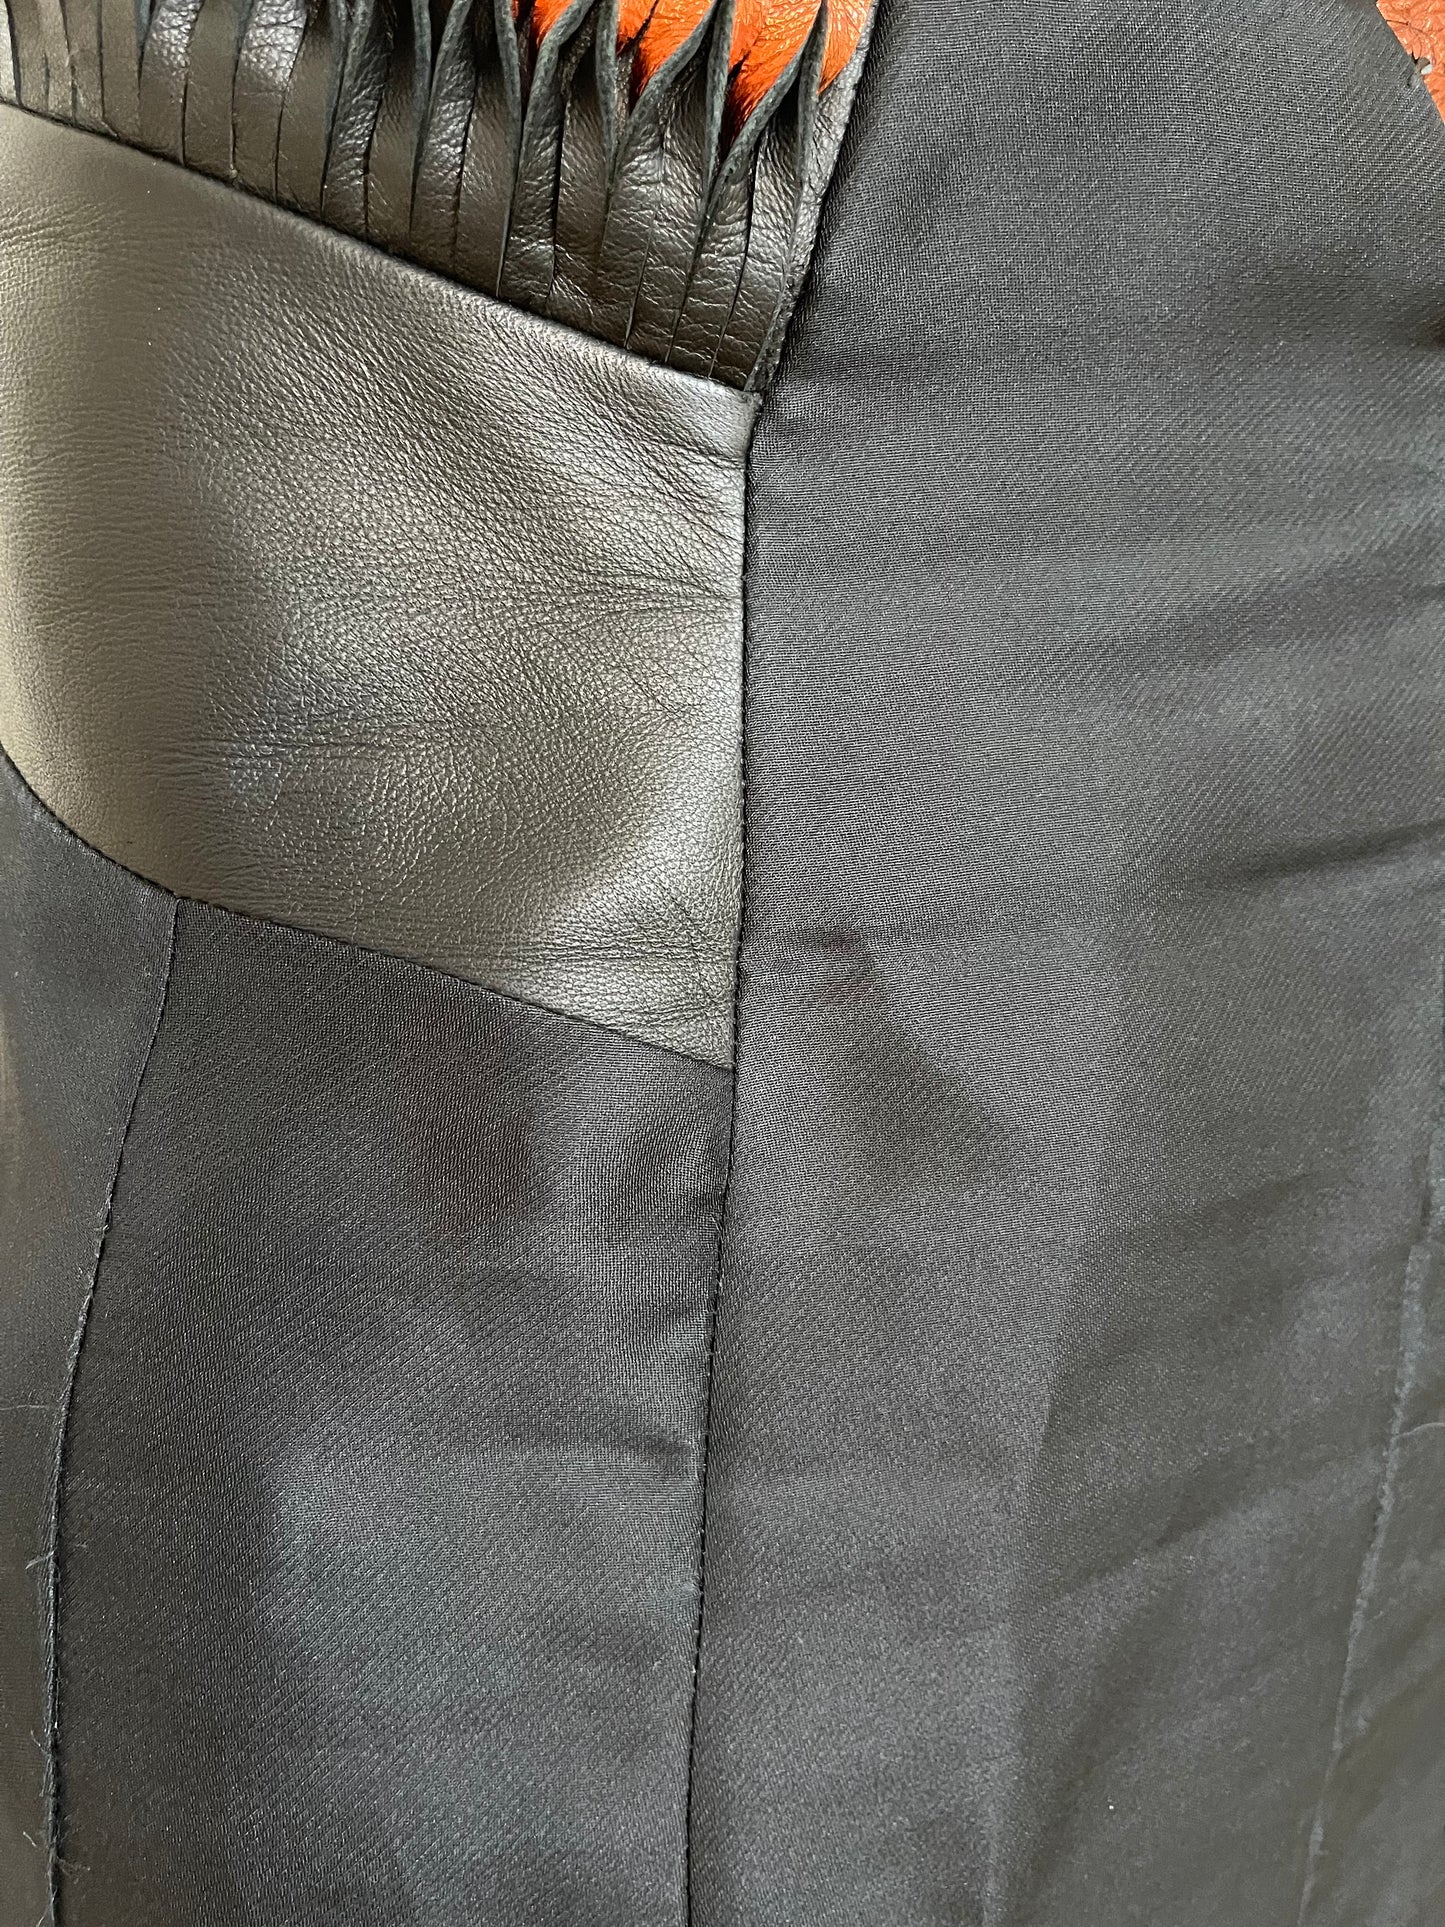 PRITCH London - Silk and Leather Dress - Size UK10 (US6)